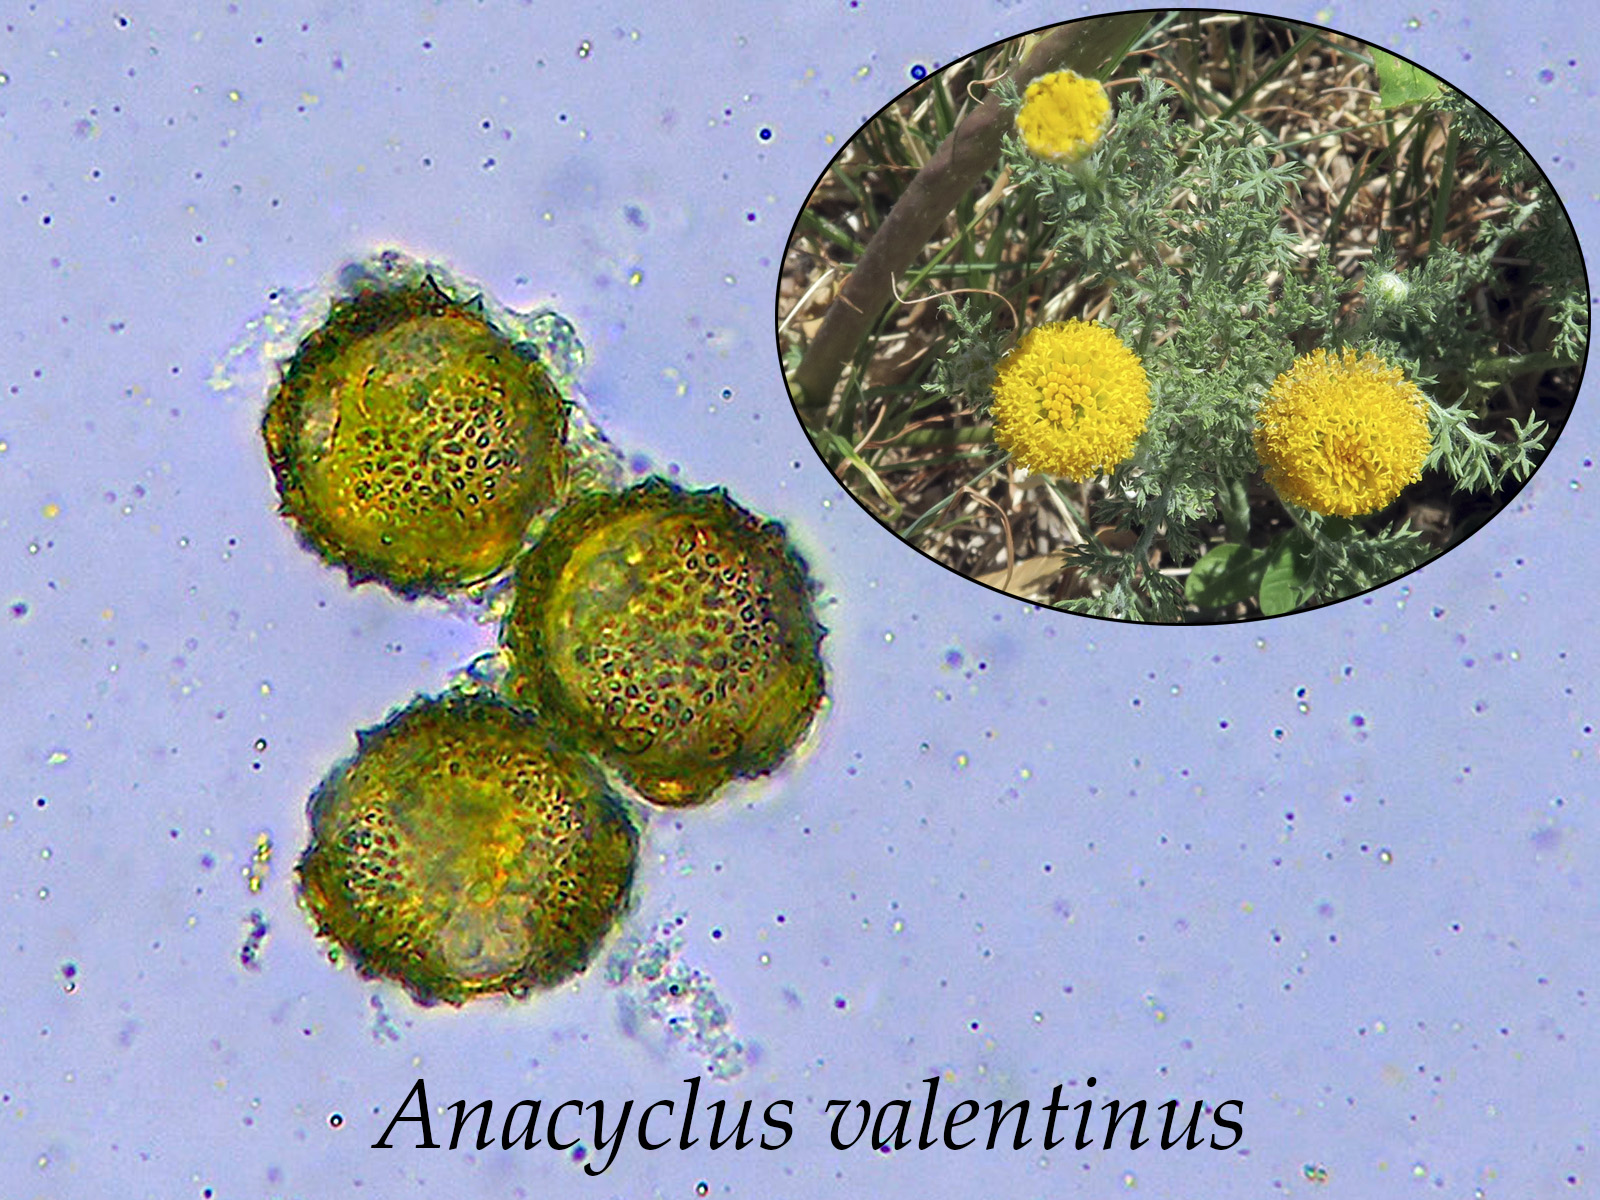 Anacyclusvalentinus.jpg